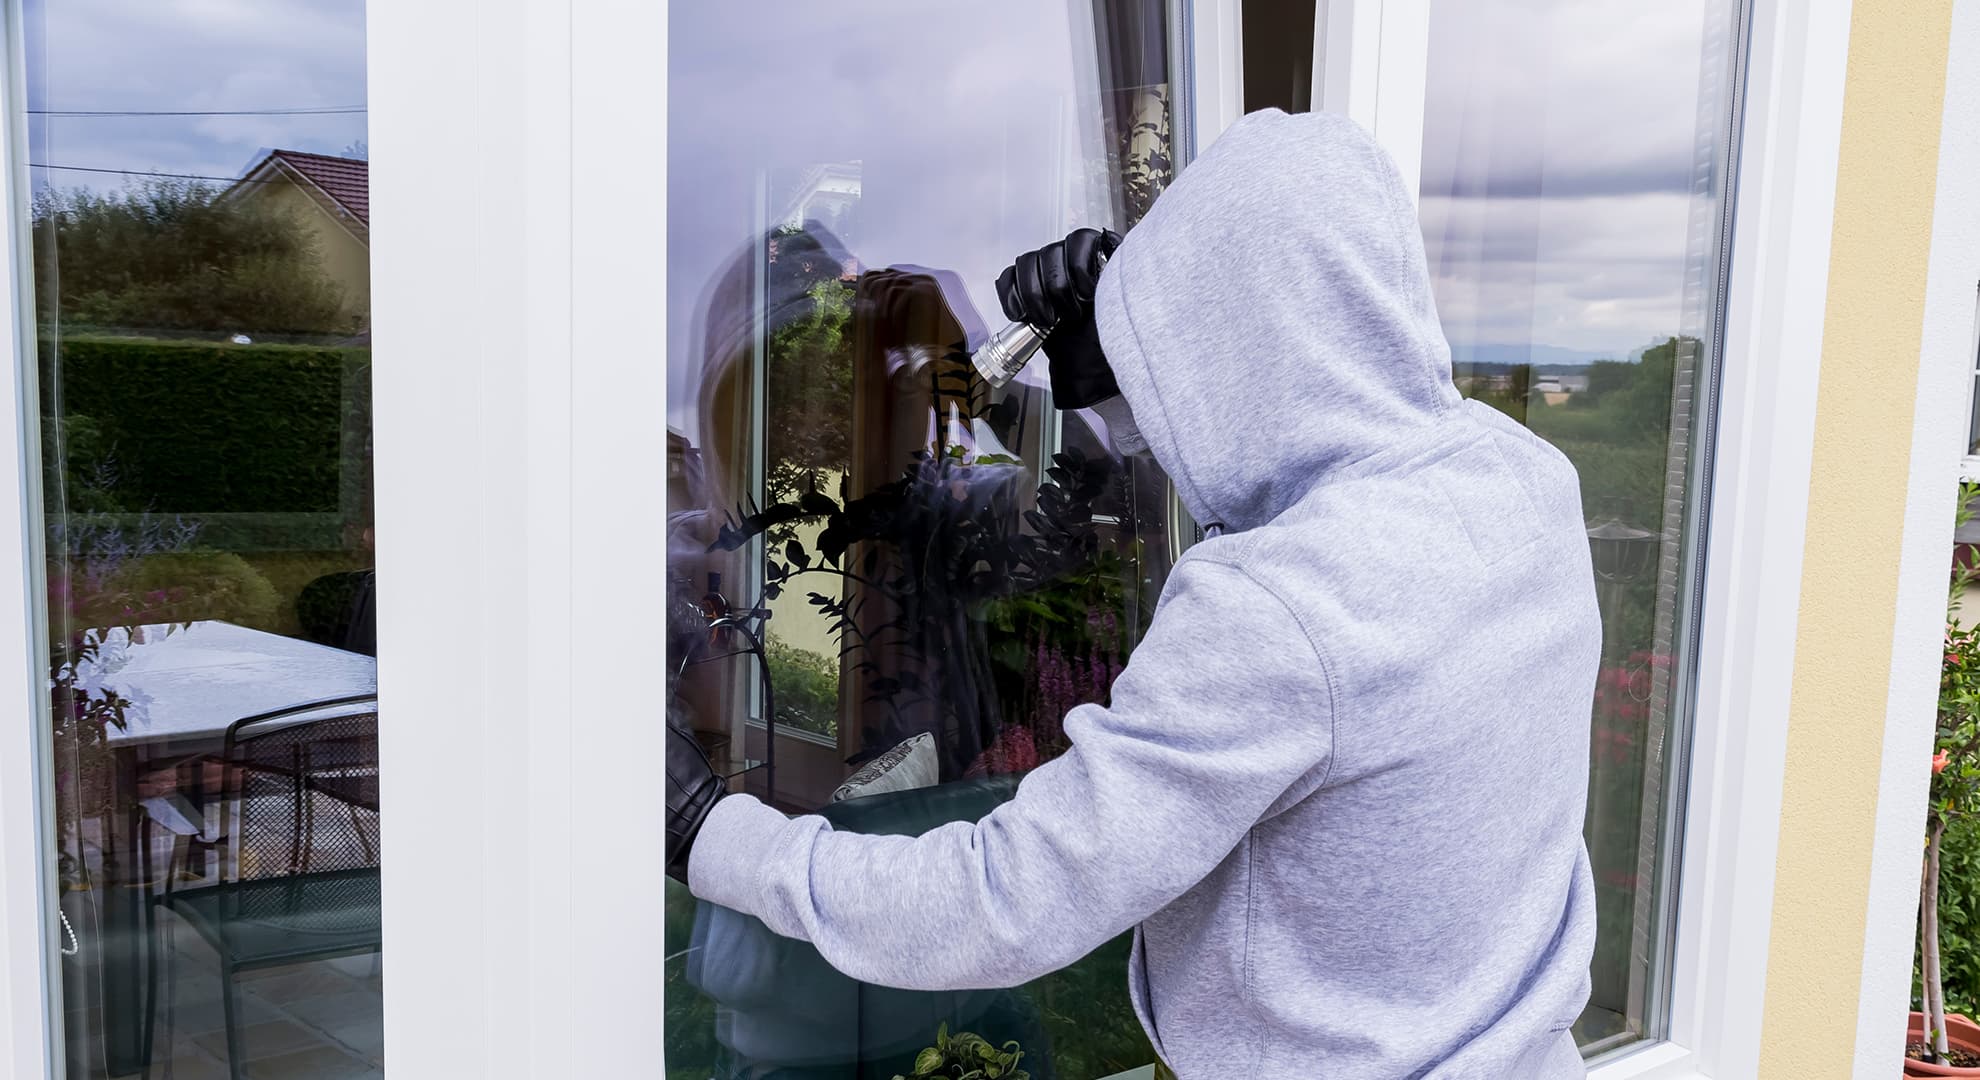 Burglar breaking into a home through a window.